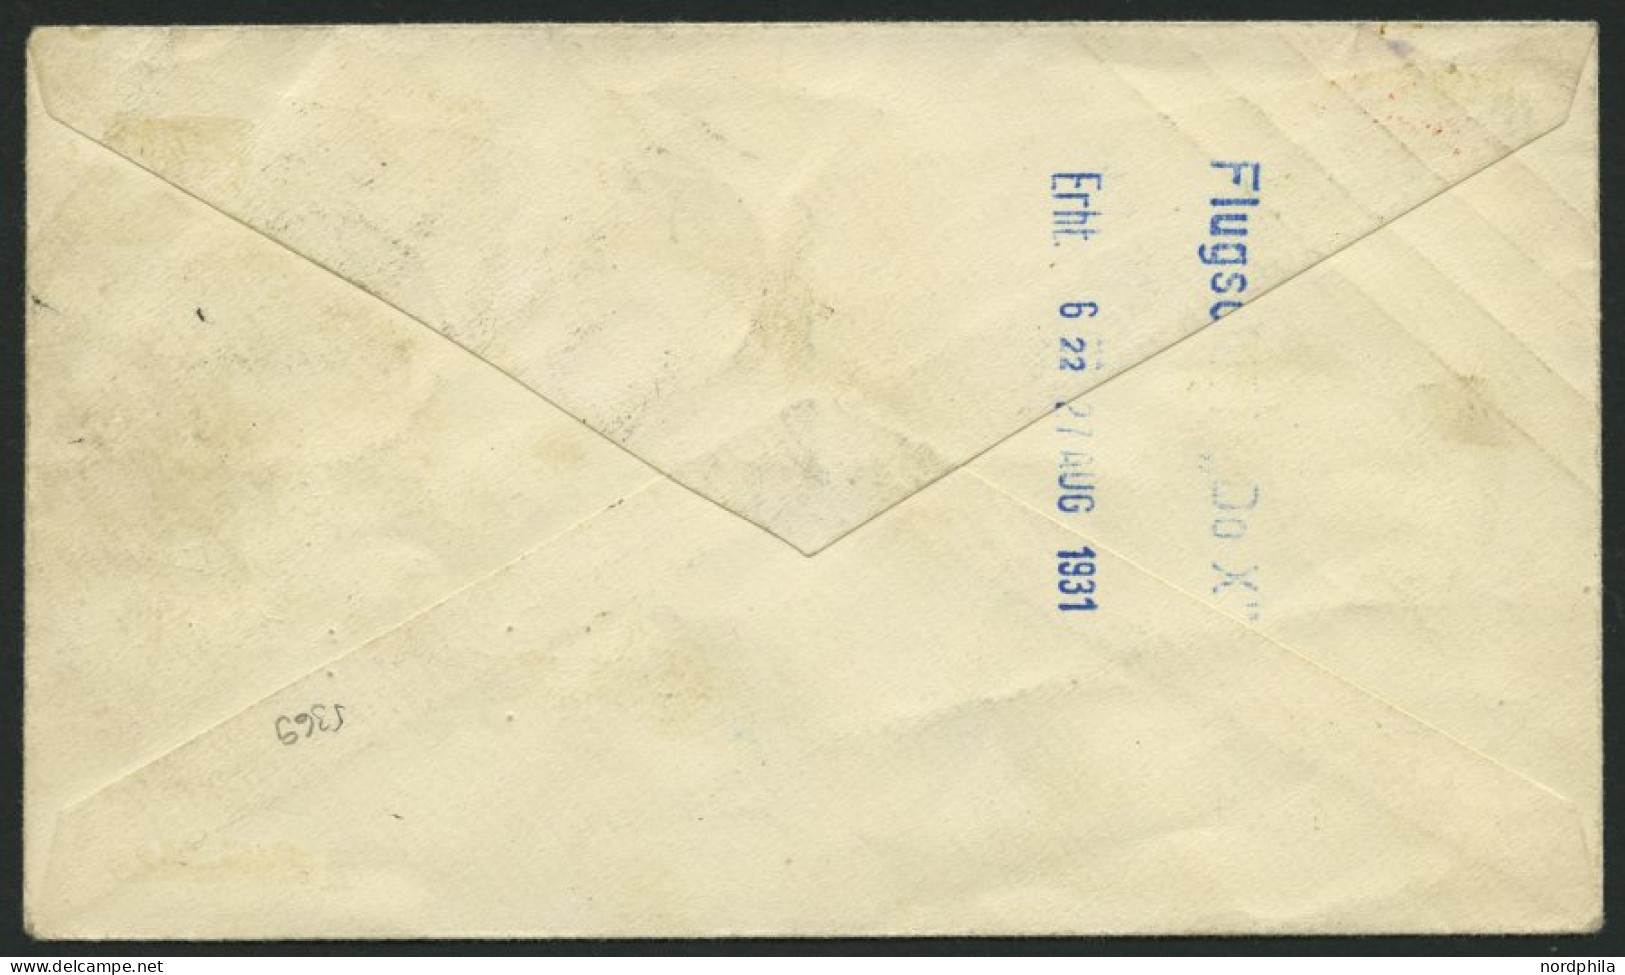 DO-X LUFTPOST DO X2.001.CH BRIEF, 31.08.1931, DO X 2, Postabgabe Trimmis, Blauer Zweikreiser VOLO DI COLLAUDO, Prachtbri - Primi Voli